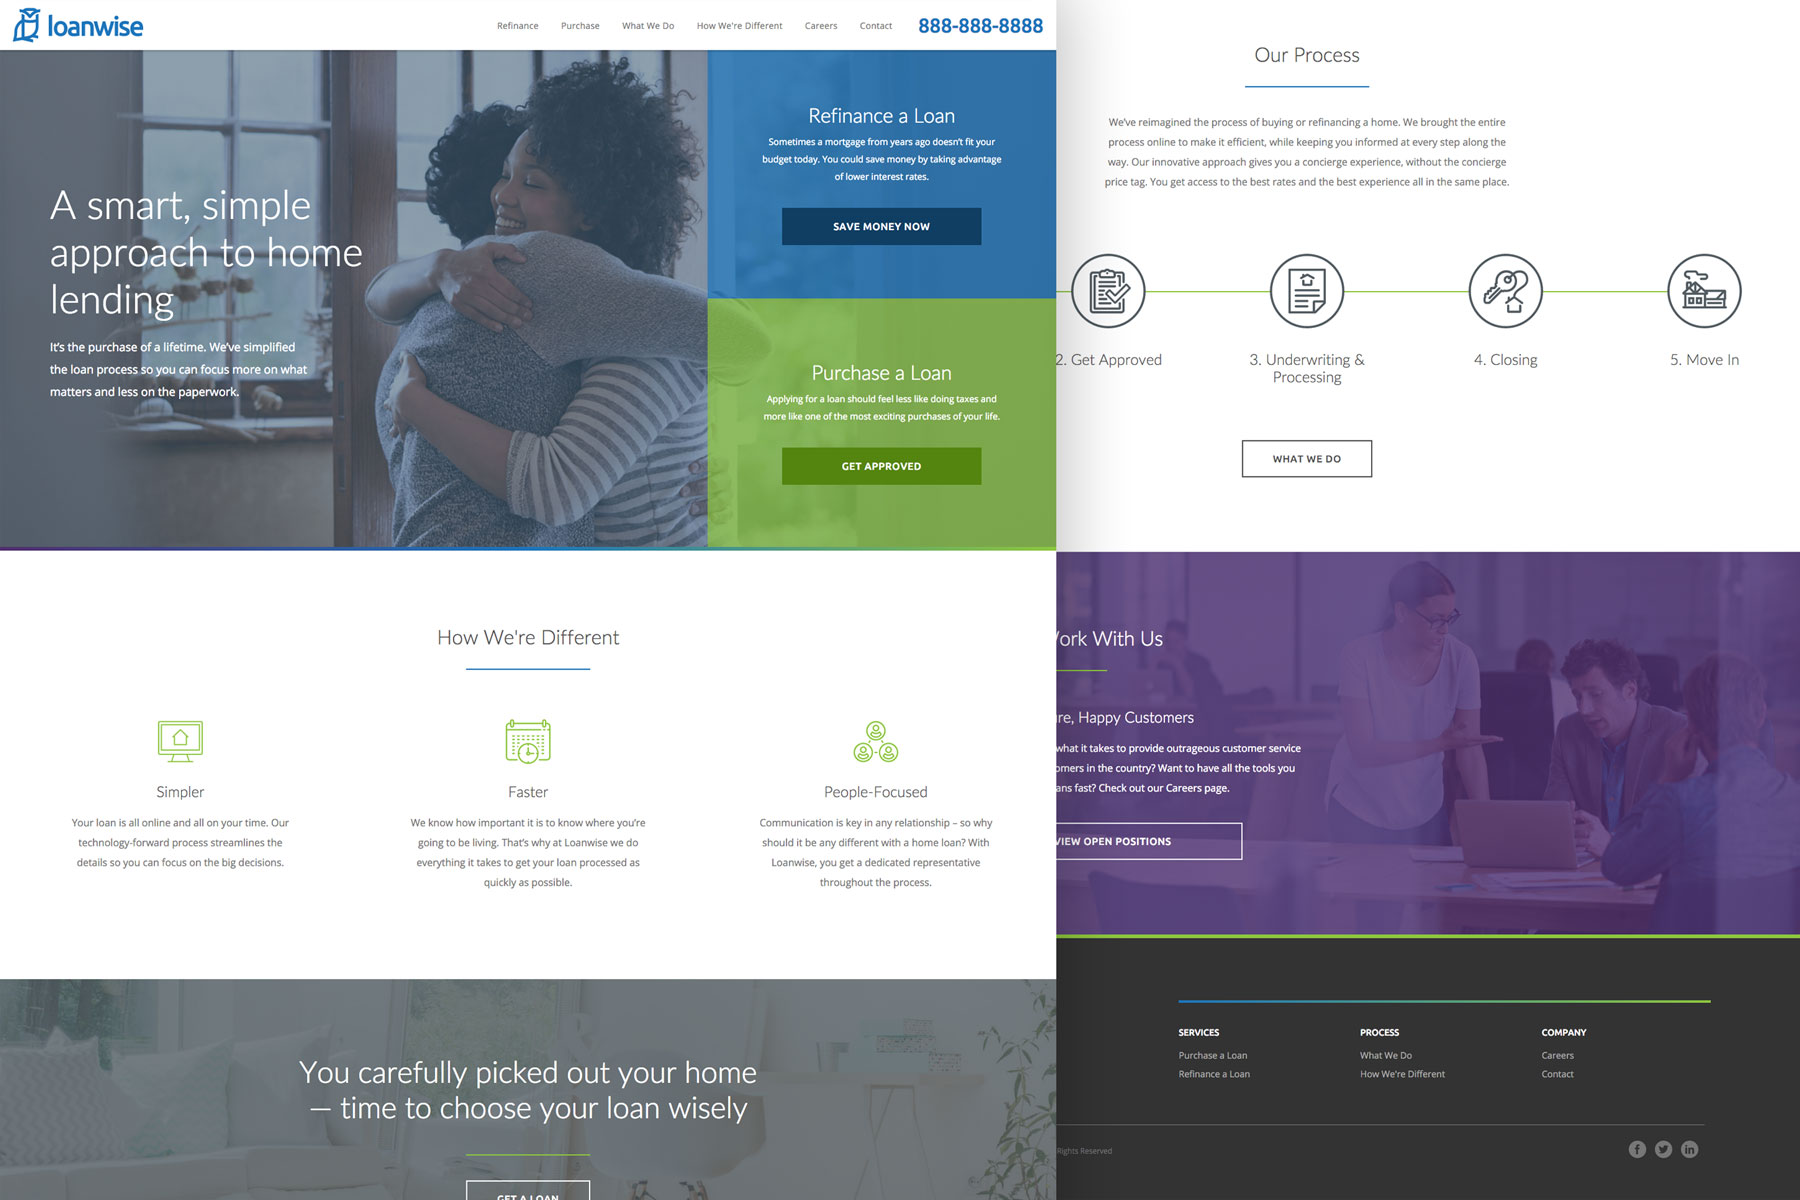 Financial Brand Homepage - 2015